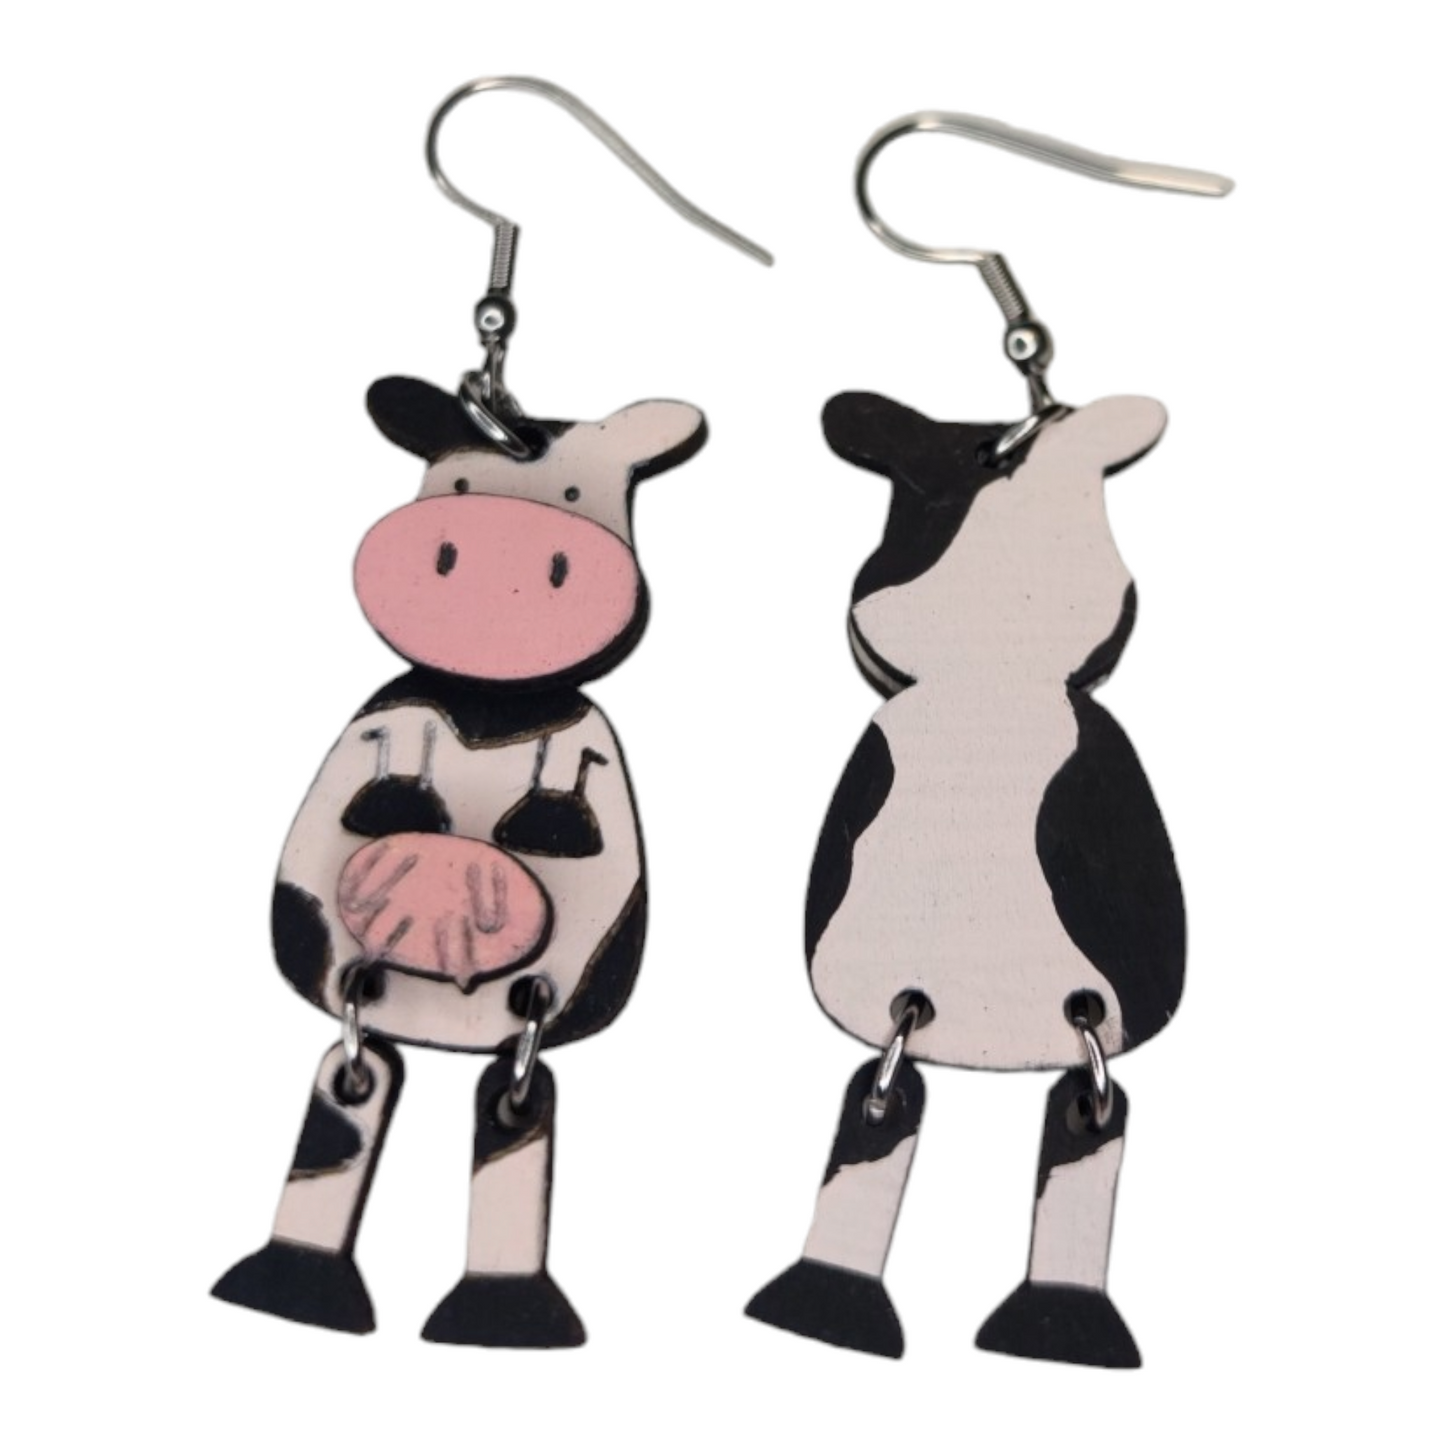 Pink Standing Jiggy Leg Cow Dangle Earring Stainless Steel Hooks